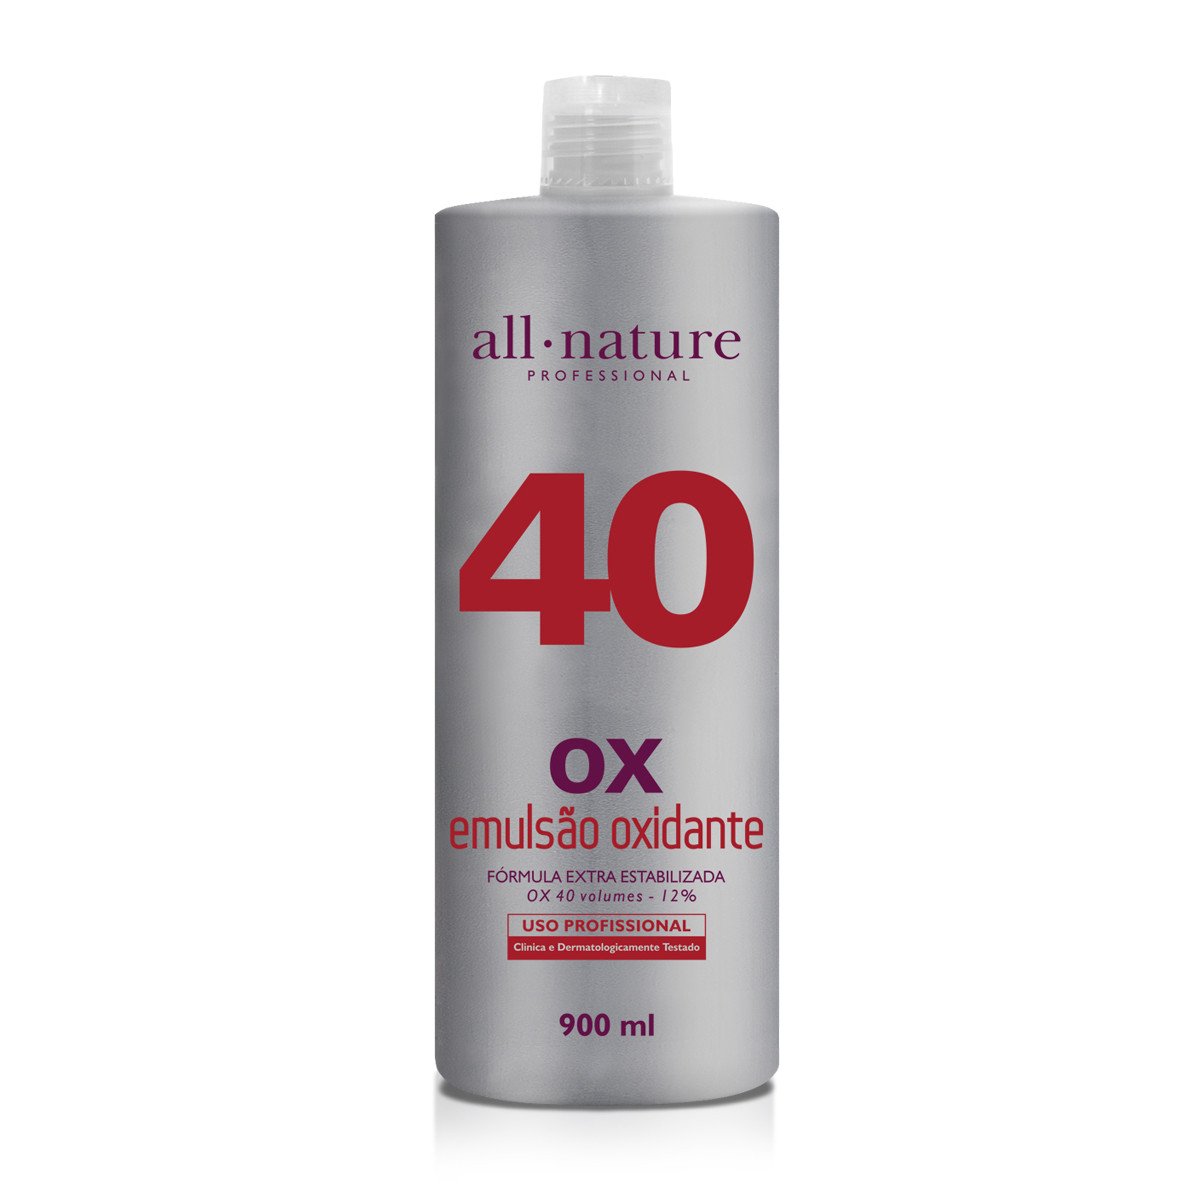 All Nature Brazilian Keratin Treatment Oxidizing Emulsion OX Discoloration Treatment 40 Vol. 12% 900ml - All Nature